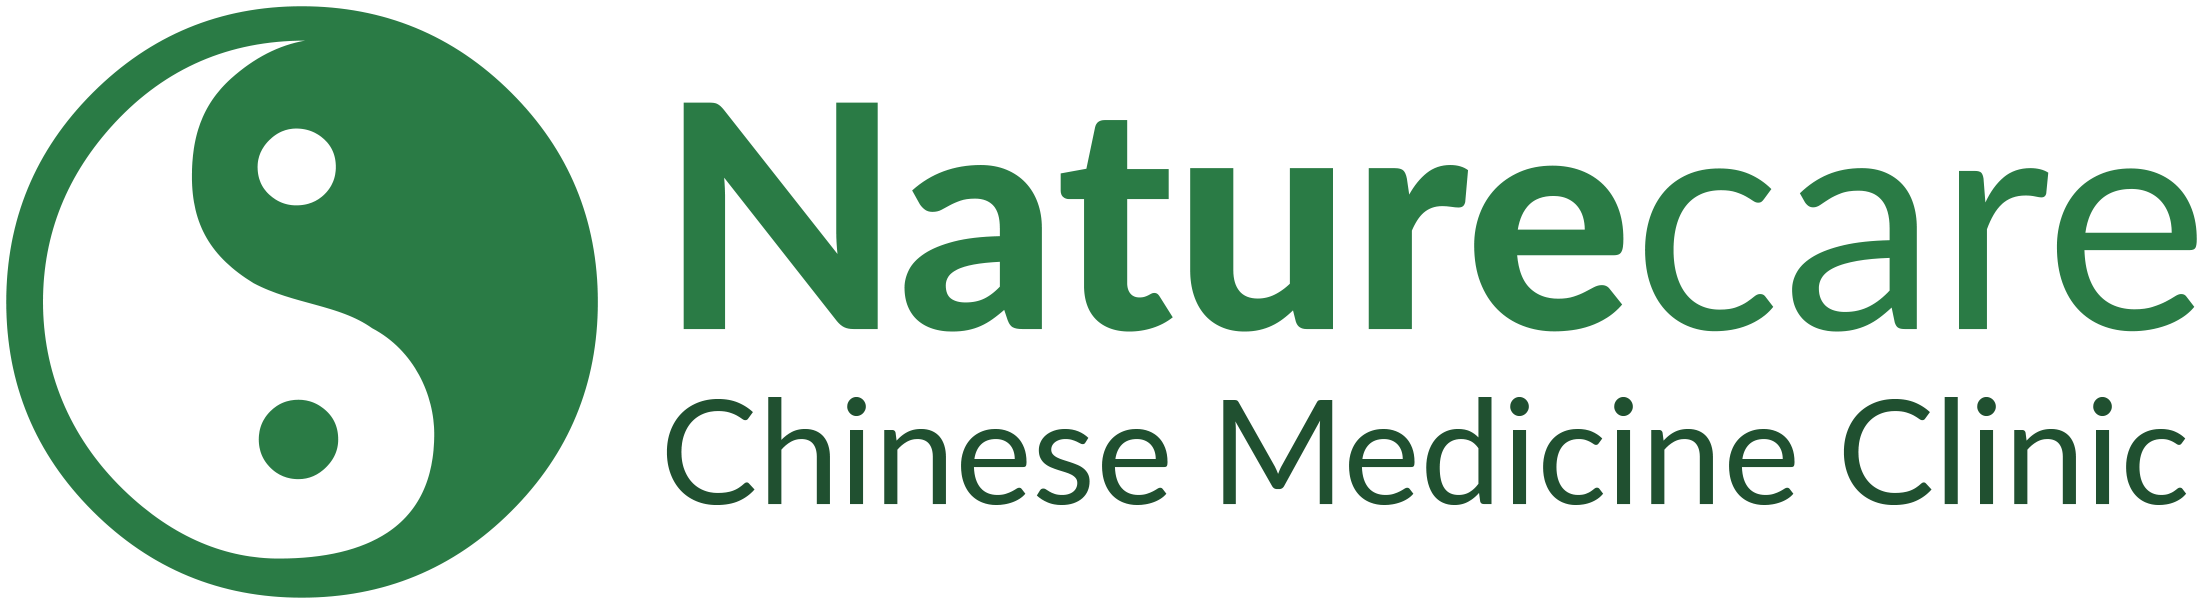 Naturecare - Chinese Medicine Clinic